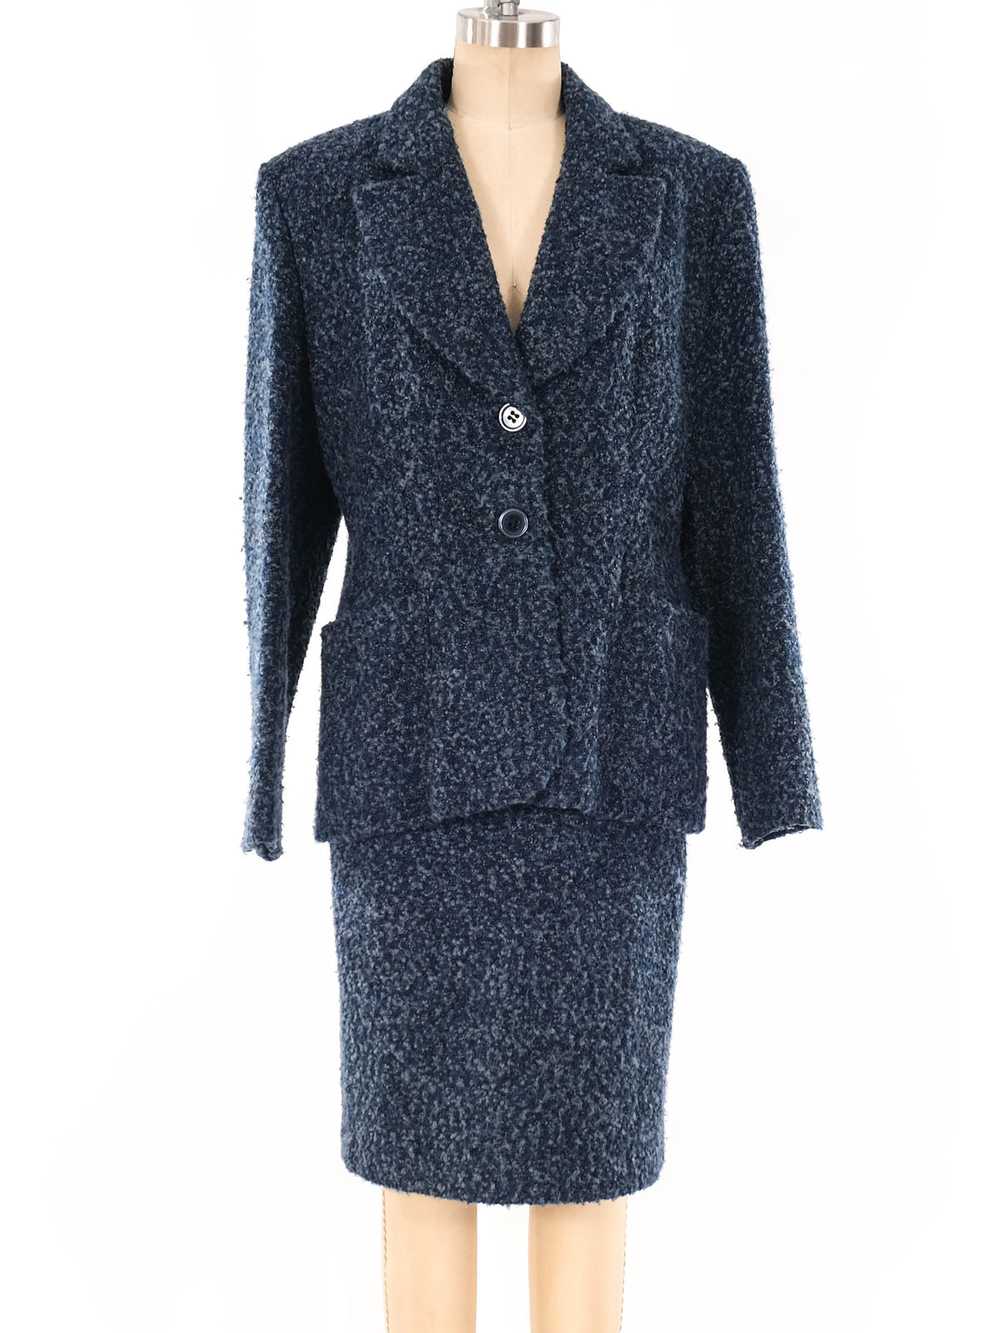 Yves Saint Laurent Boucle Tweed Suit - image 1